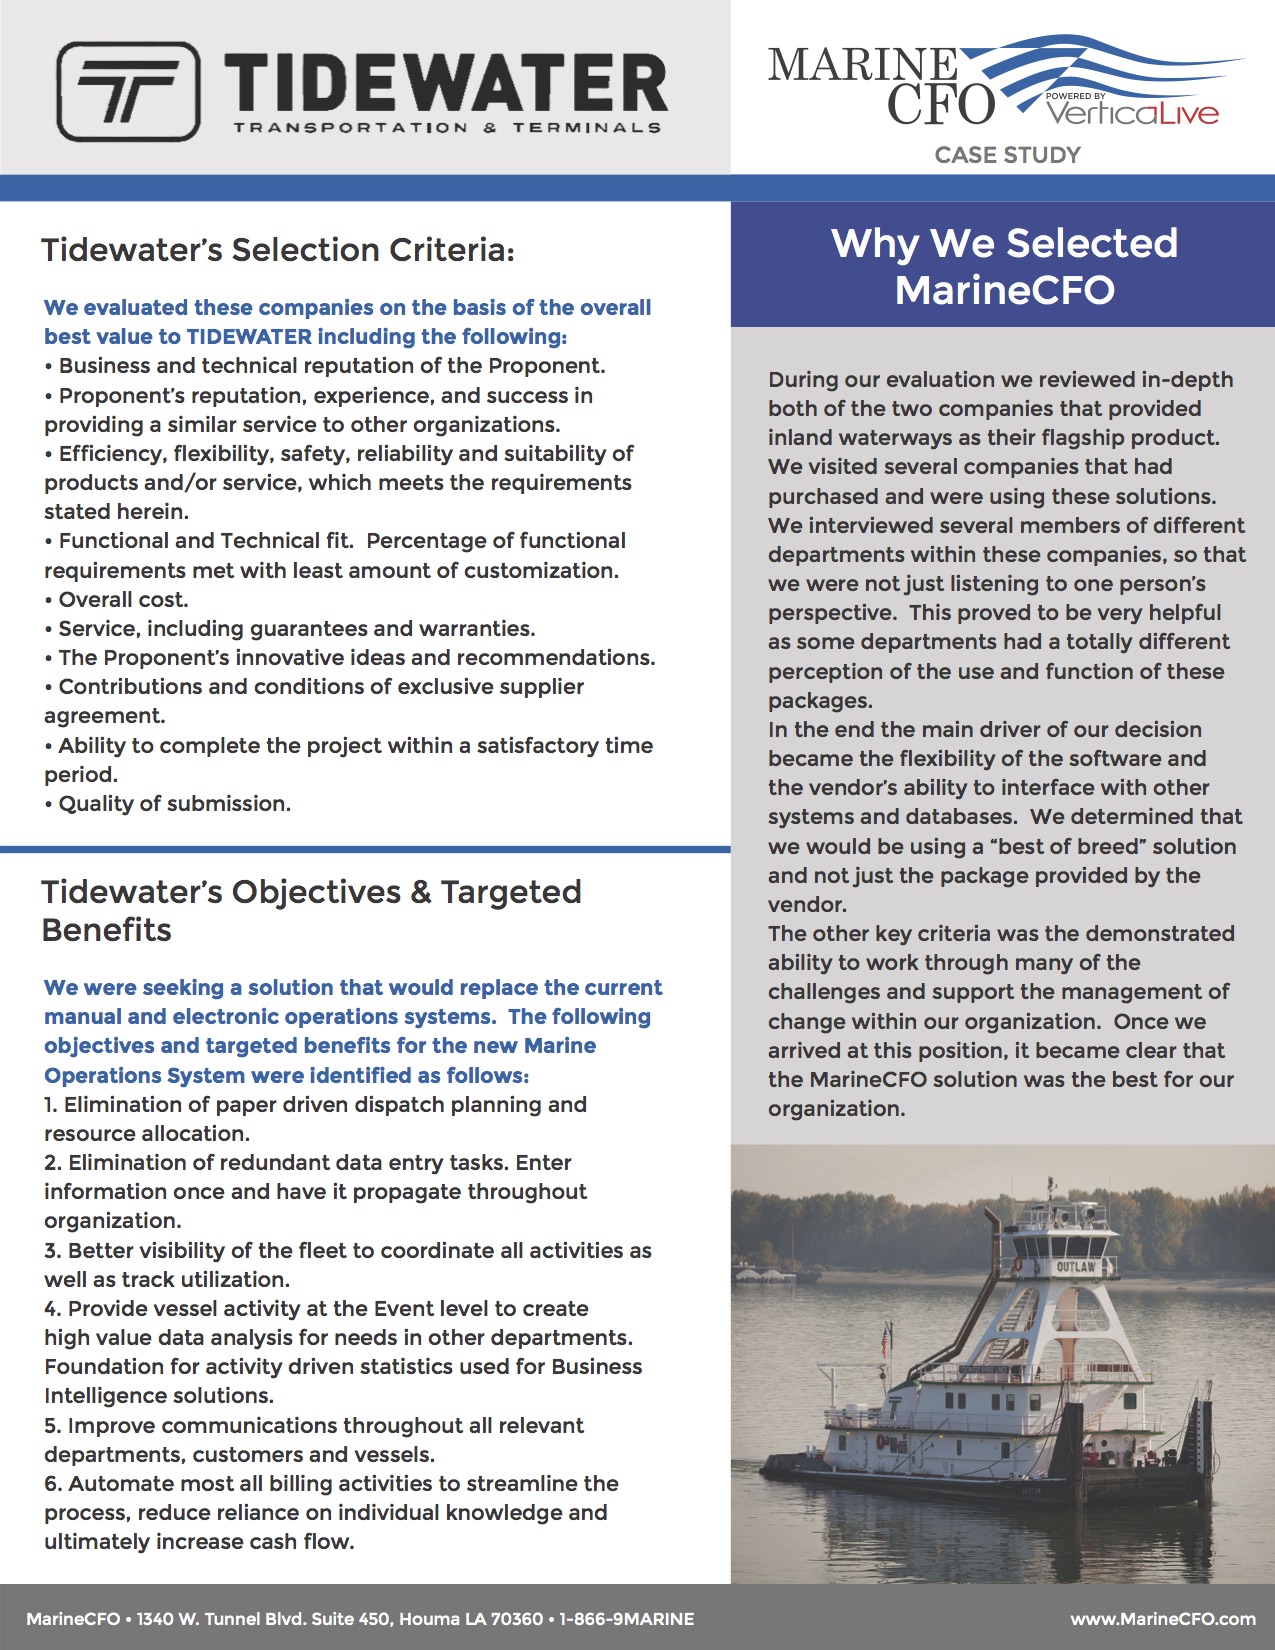 Tidewater / MarineCFO Case Study pg 2